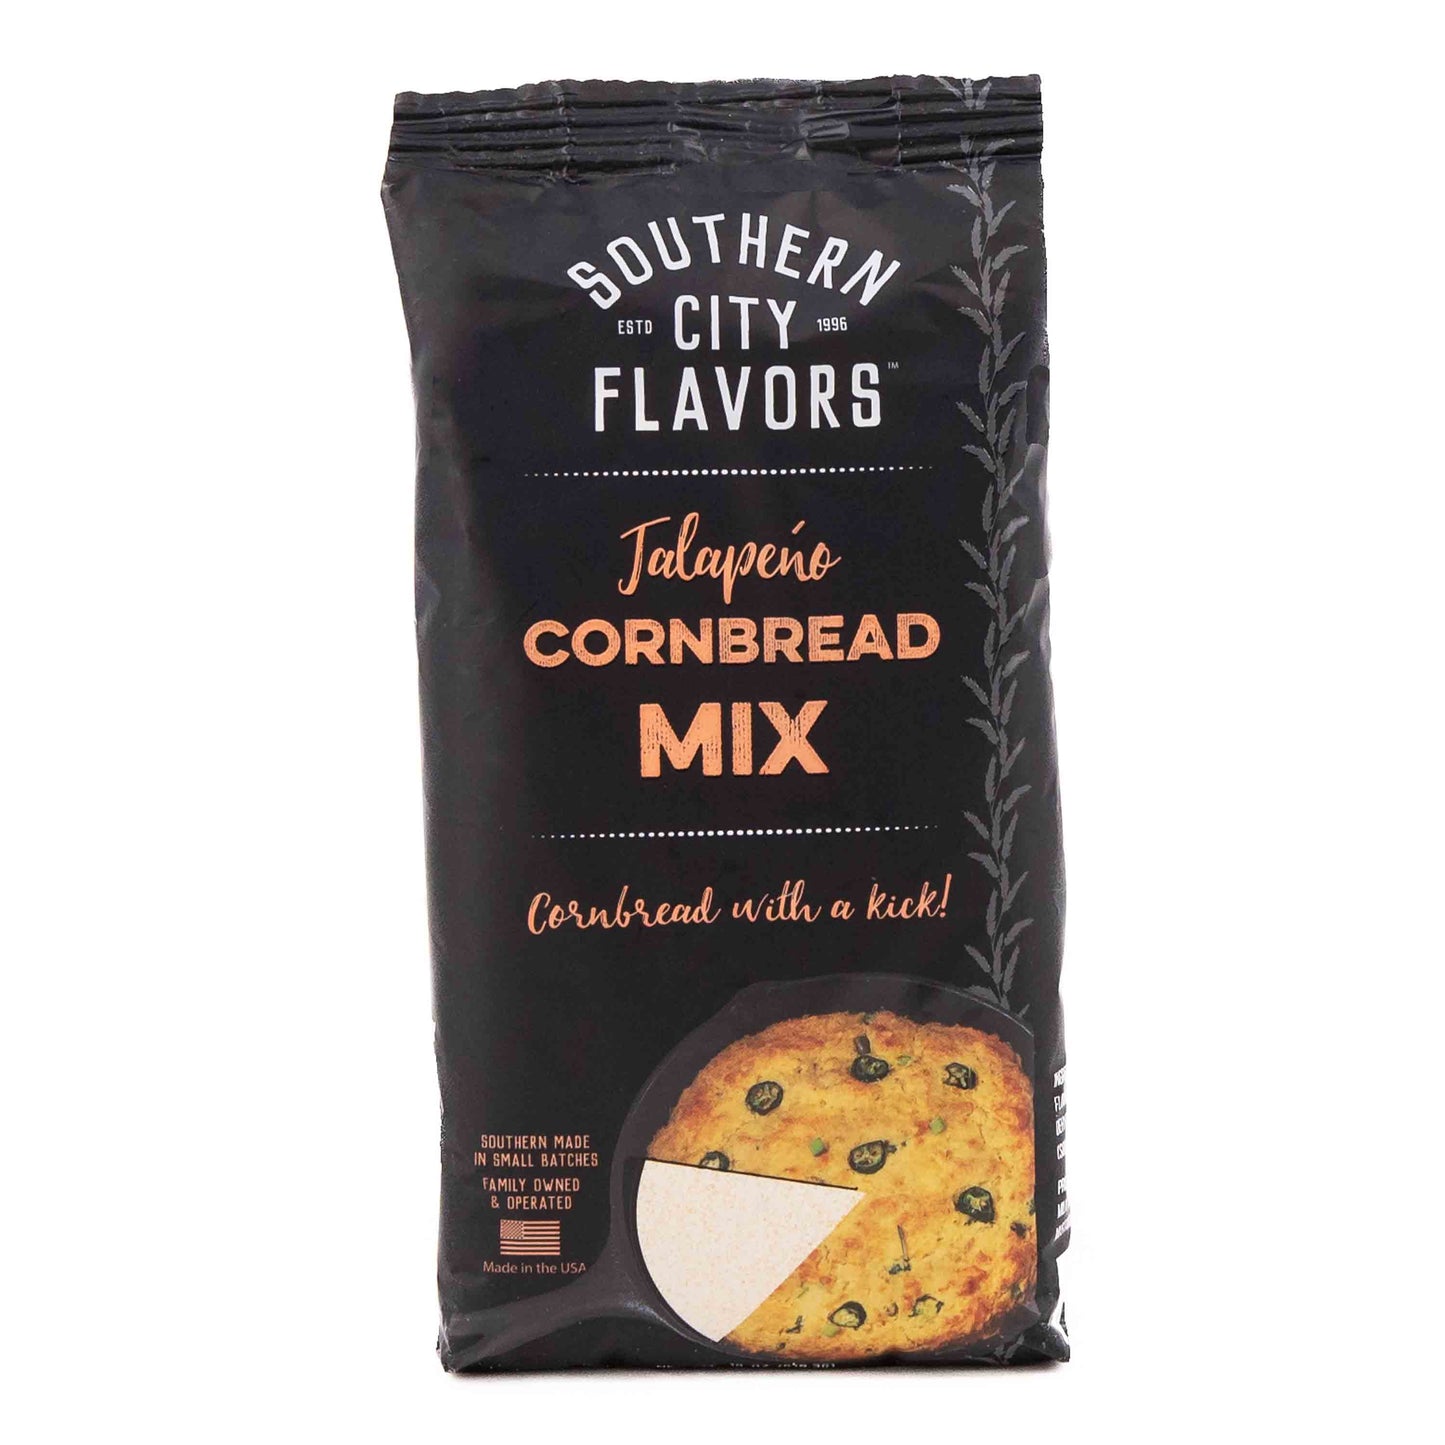 Jalapeno Corn Bread Mix